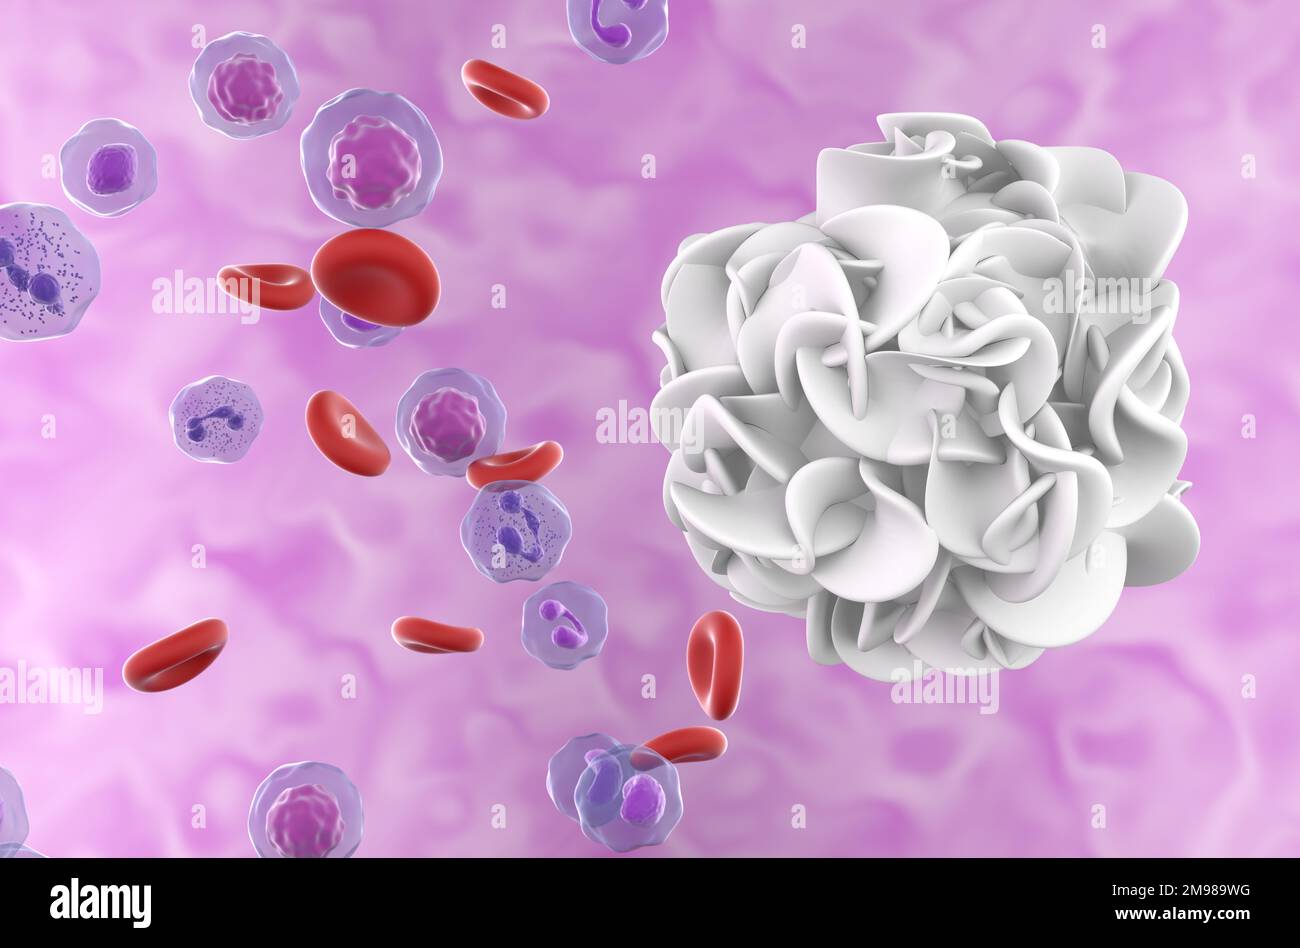 Immature dendritic cell - super closeup view 3d illustration Stock Photo